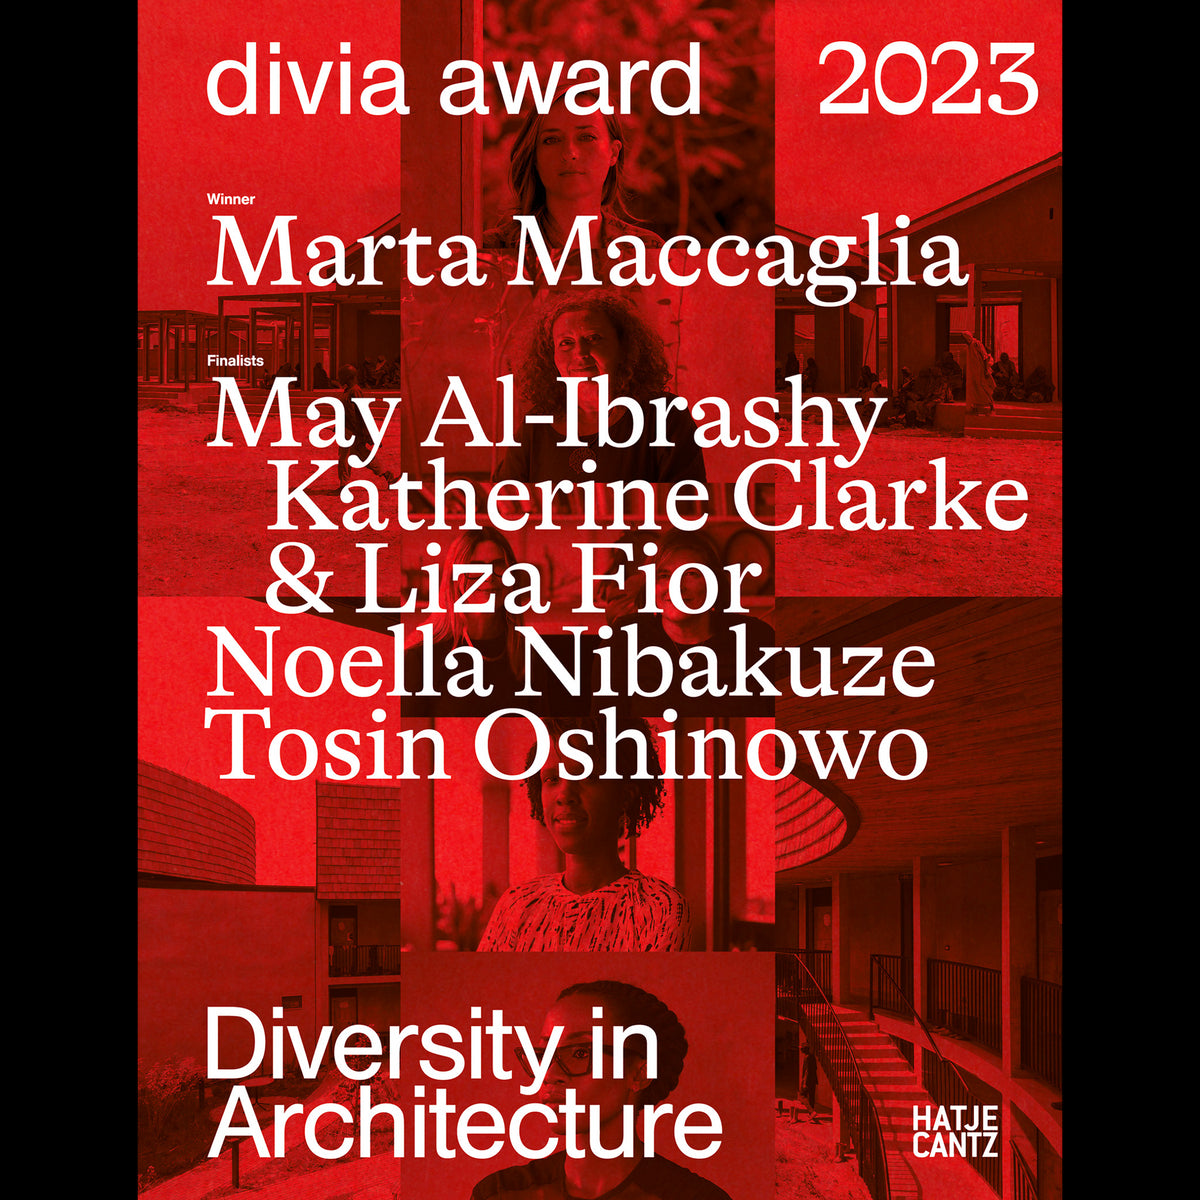 Coverbild divia award 2023